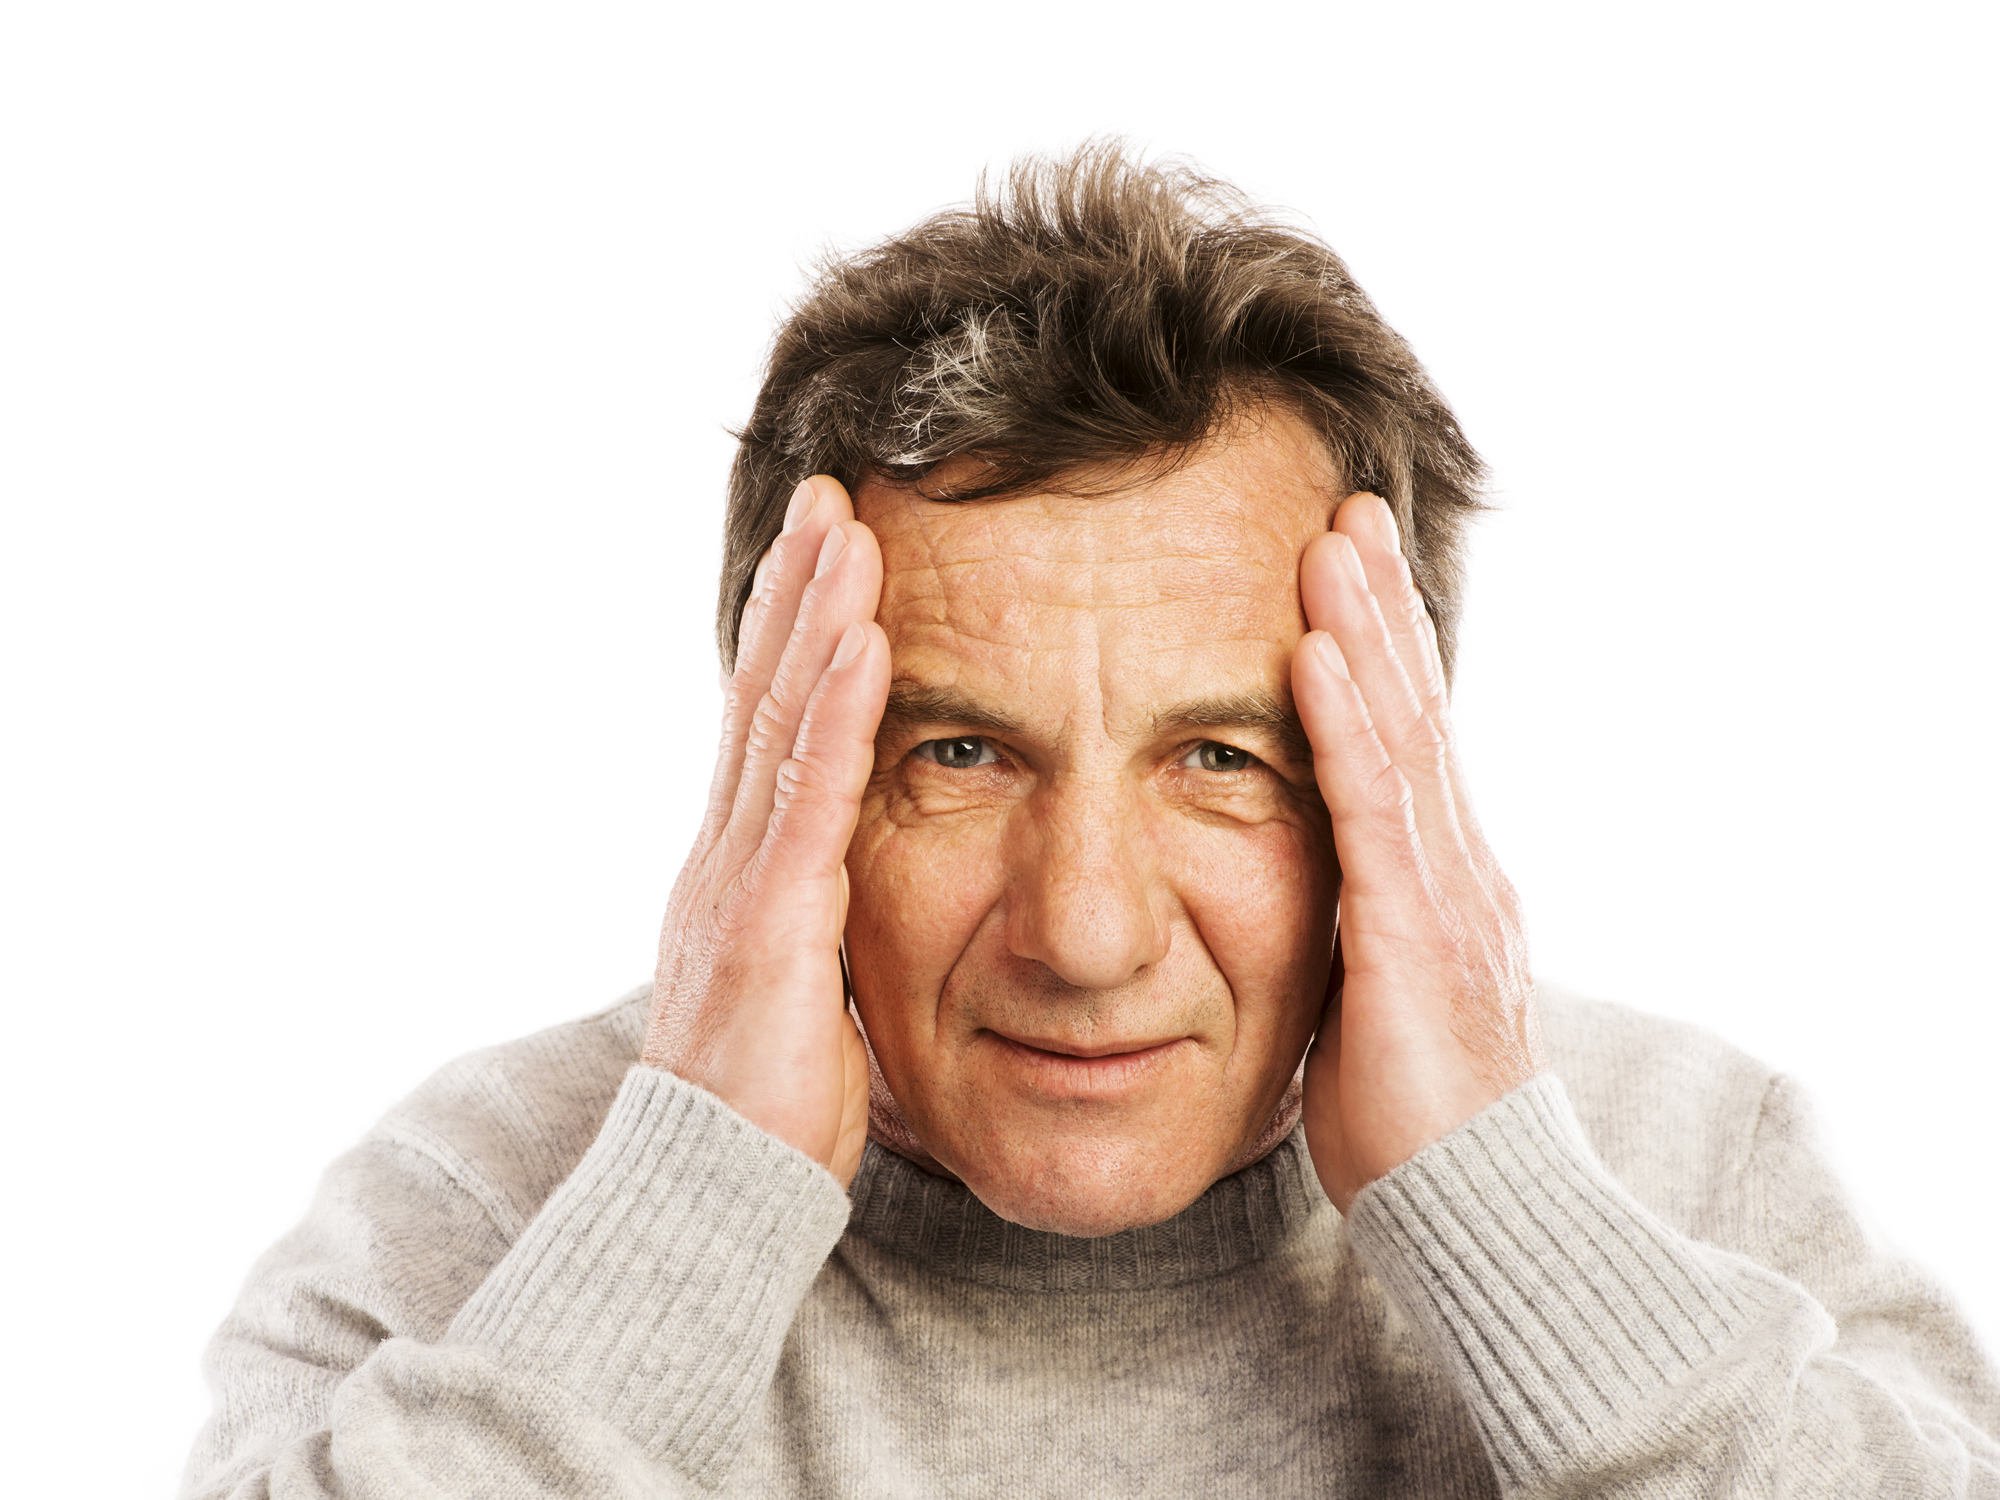 The strange symptom that increases dementia risk 54 percent